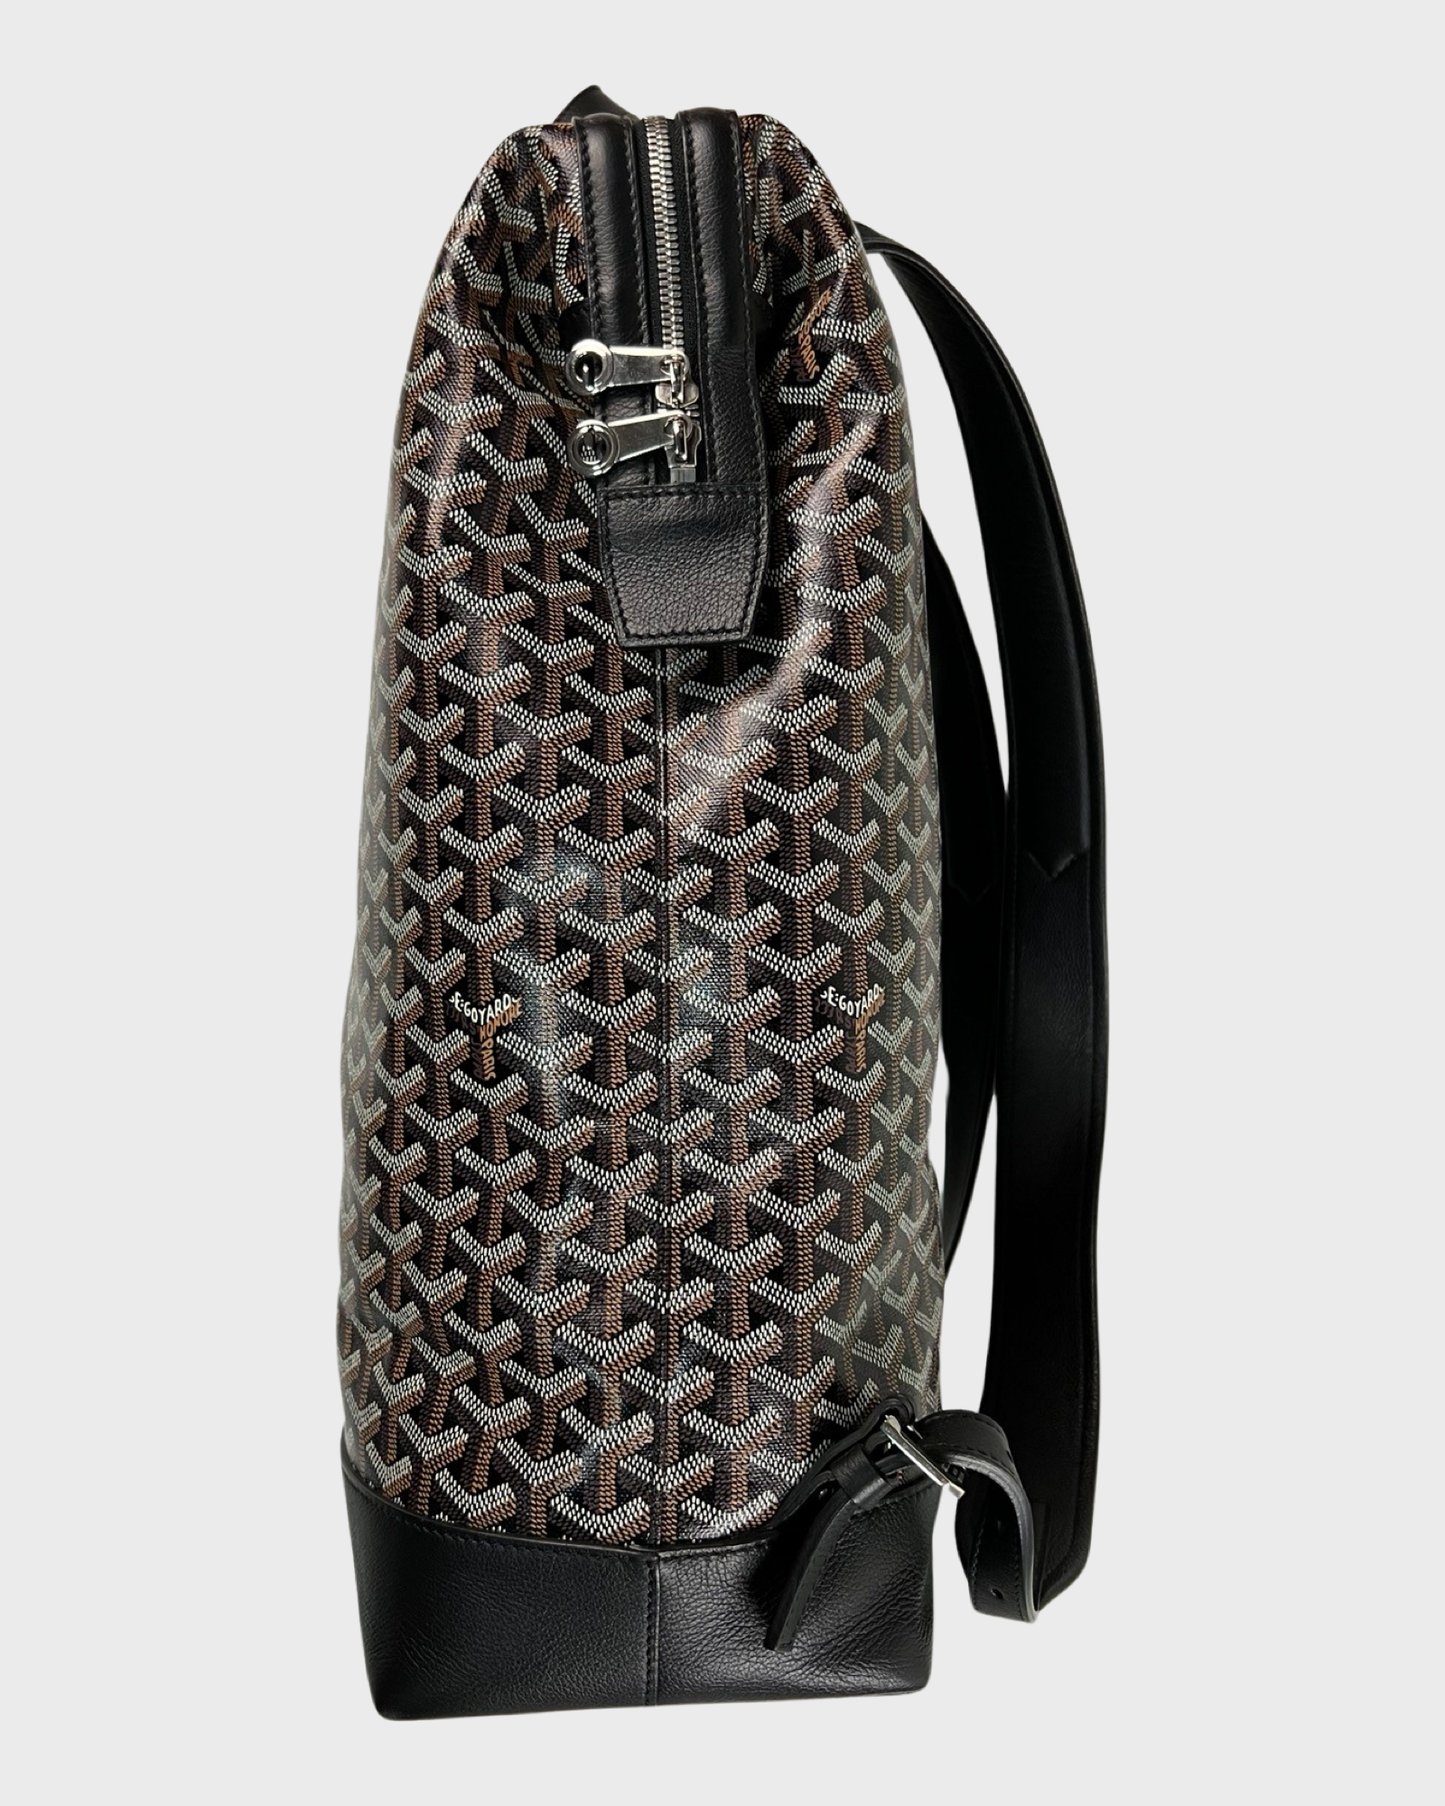 Goyard Cisalpin Backpack in black SZ:OS